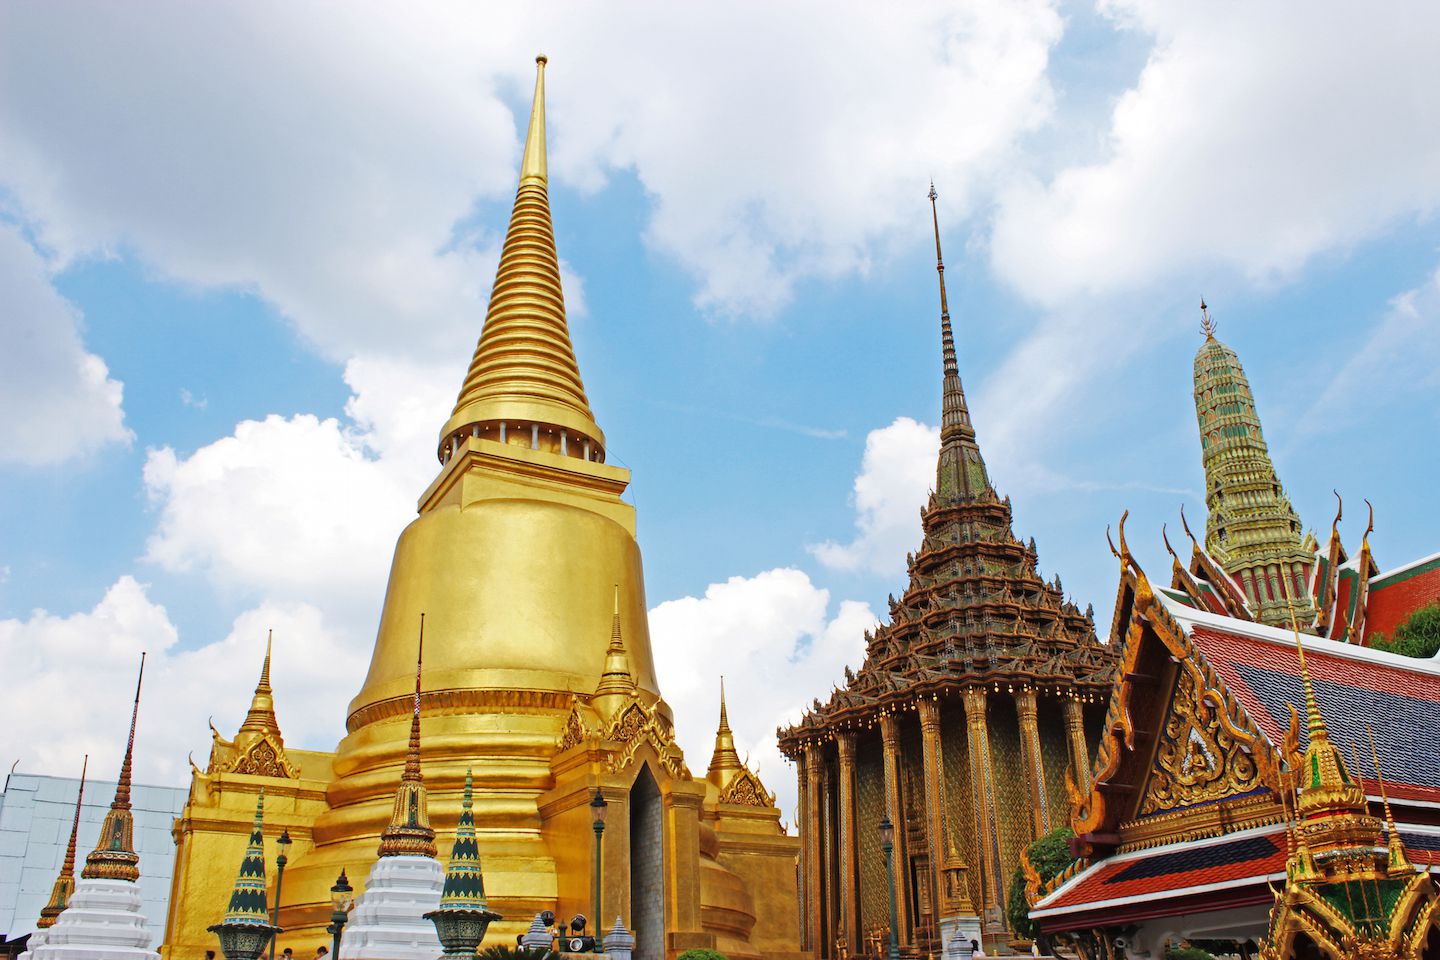 Walking into Wat Phra Kaew in the Grand Palace, Bangkok